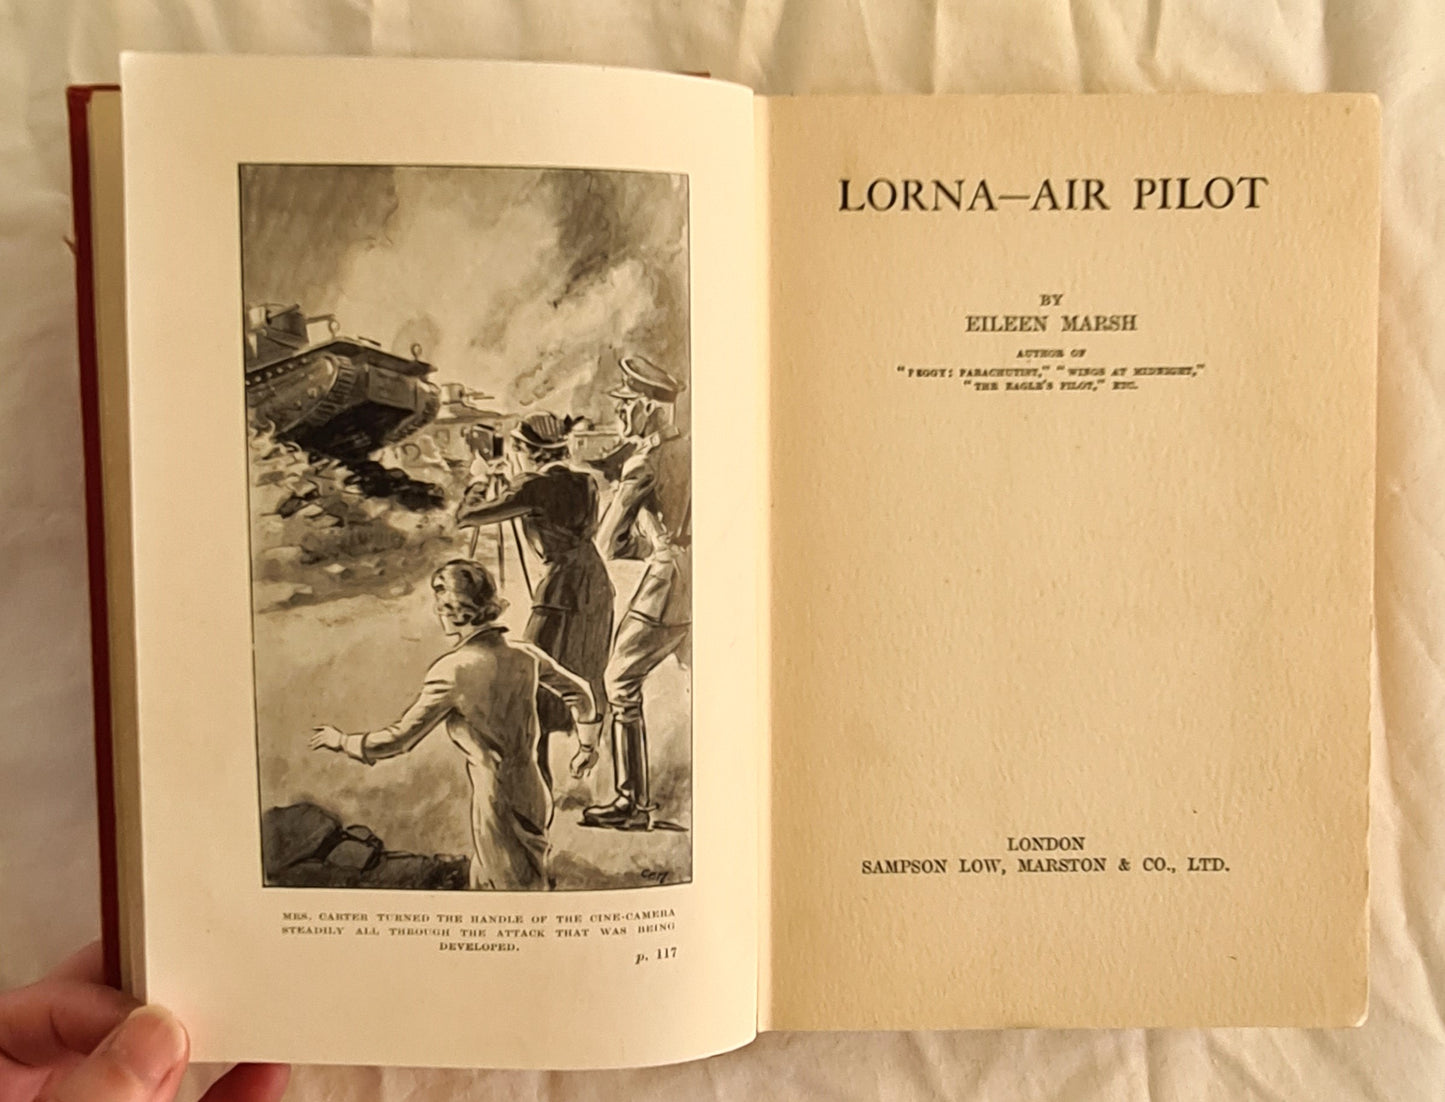 Lorna – Air Pilot by Eileen Marsh